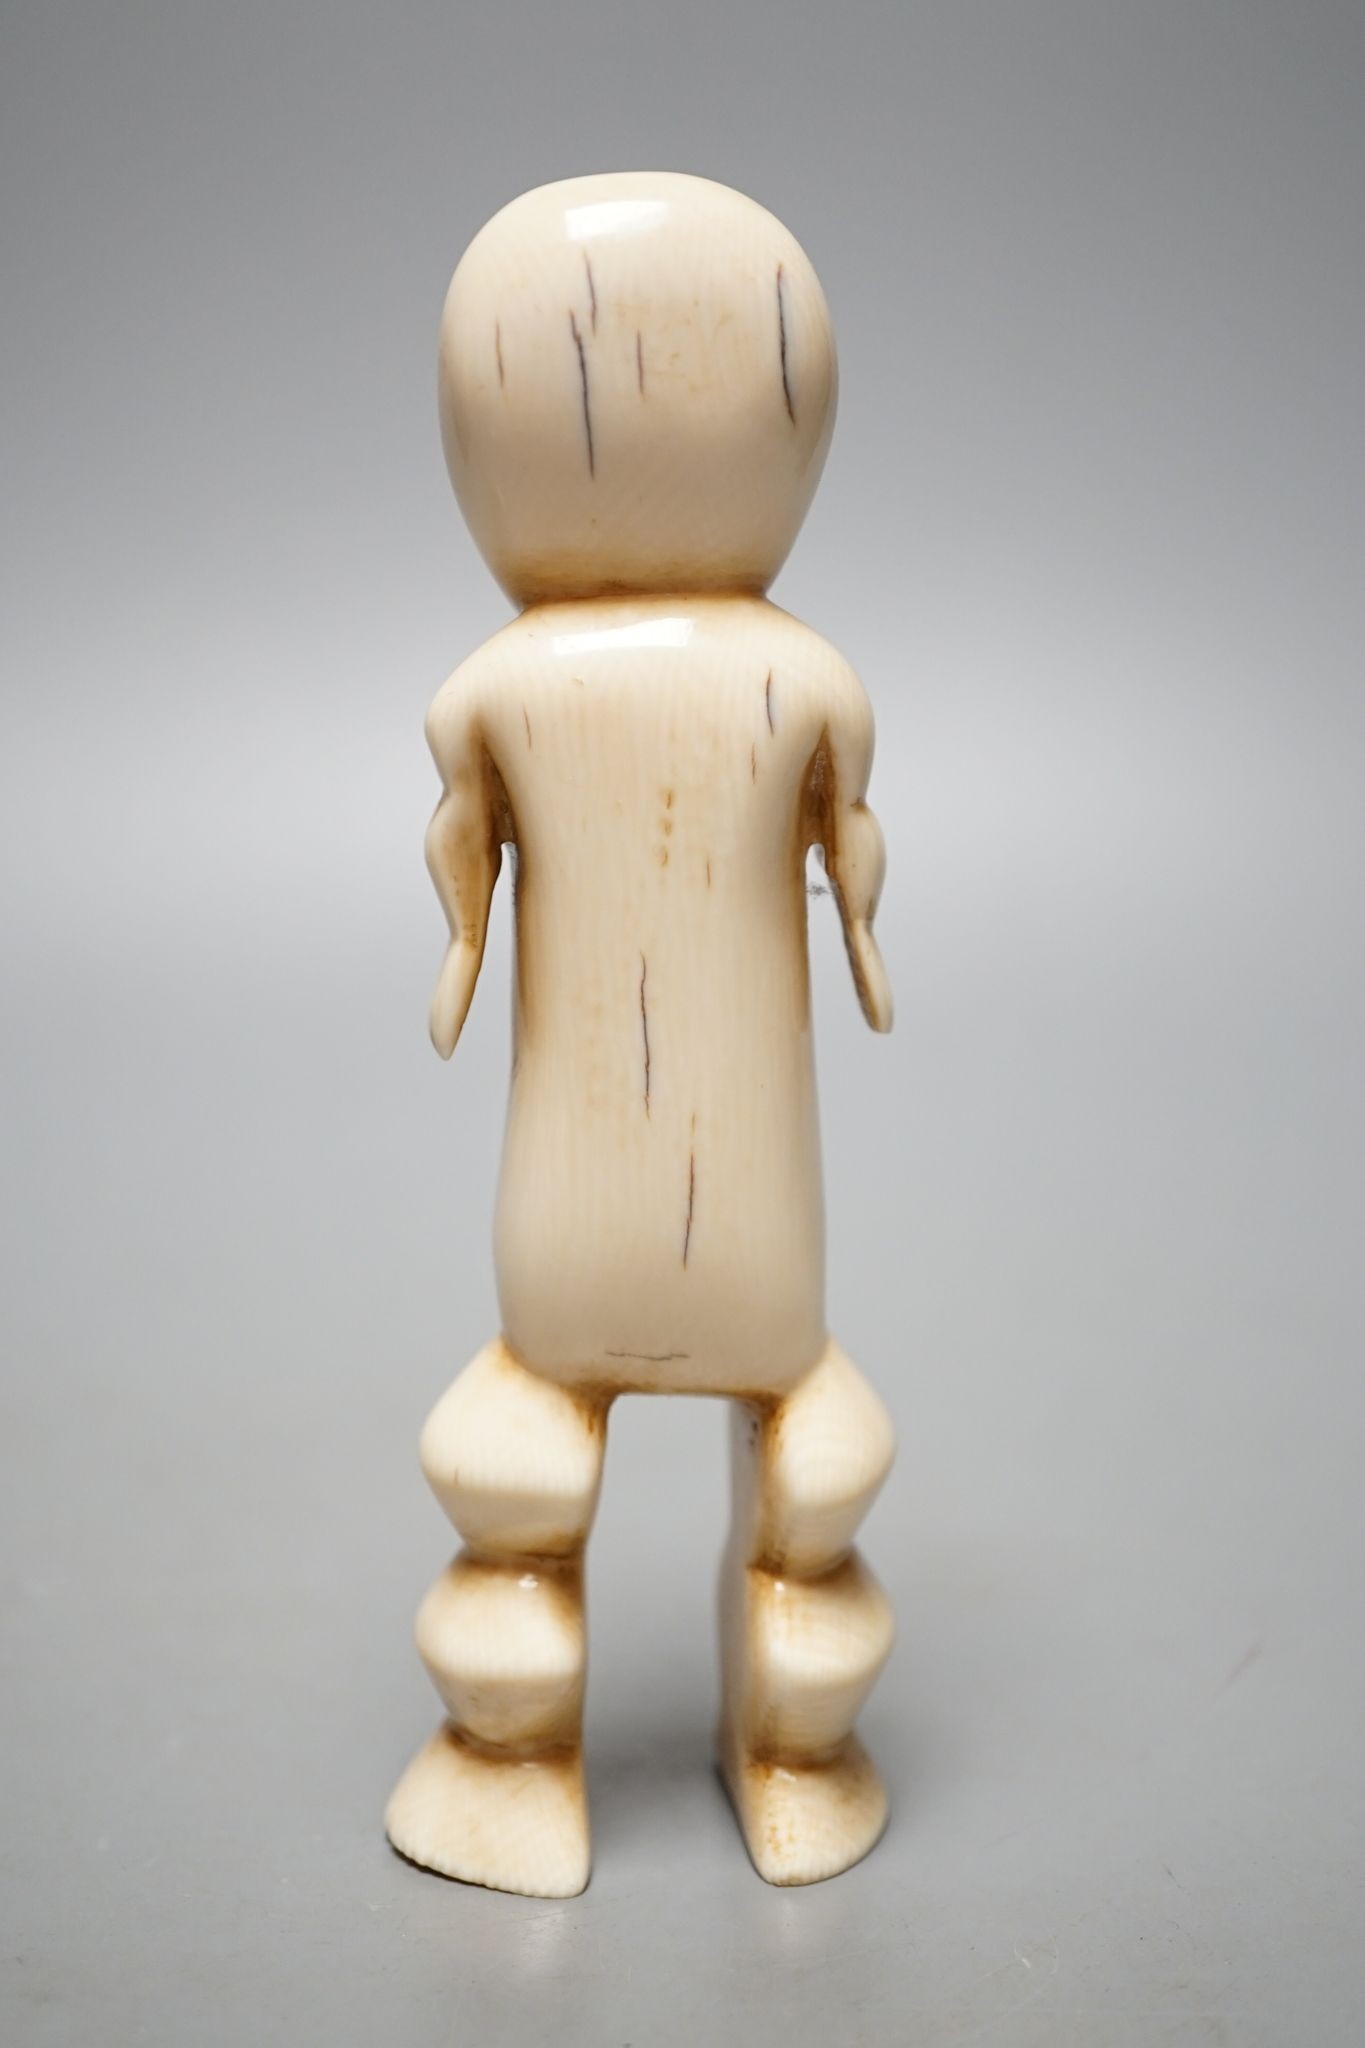 A Lega ivory figure, 15 cms high.